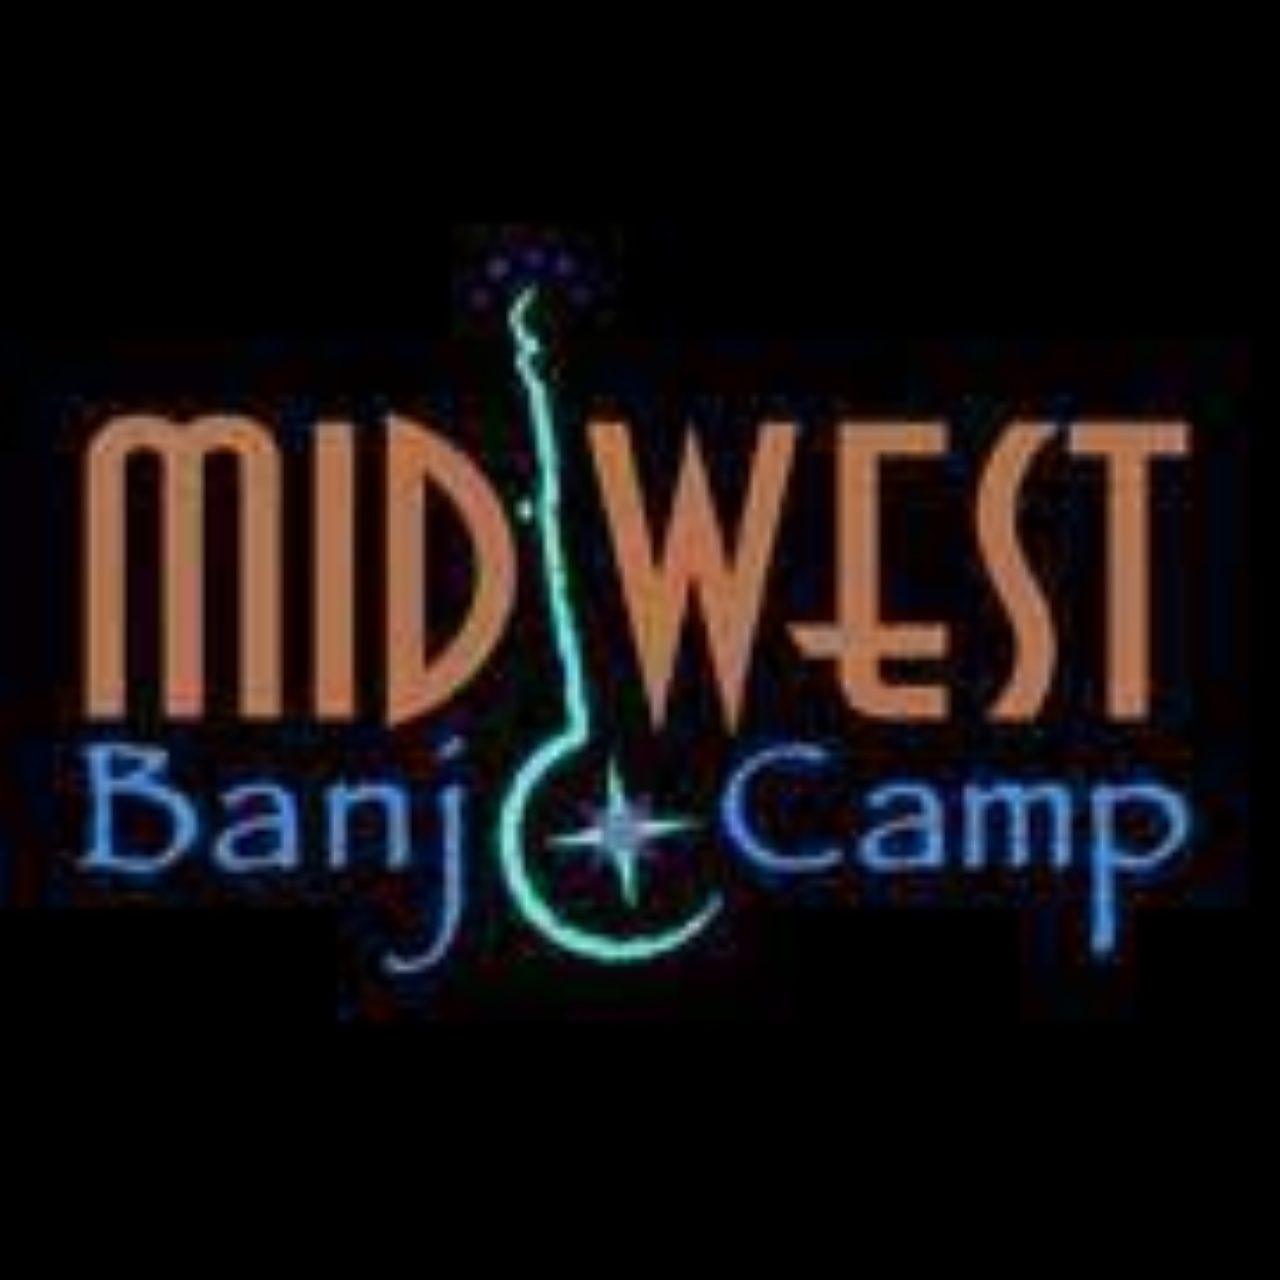 Midwest Banjo Camp